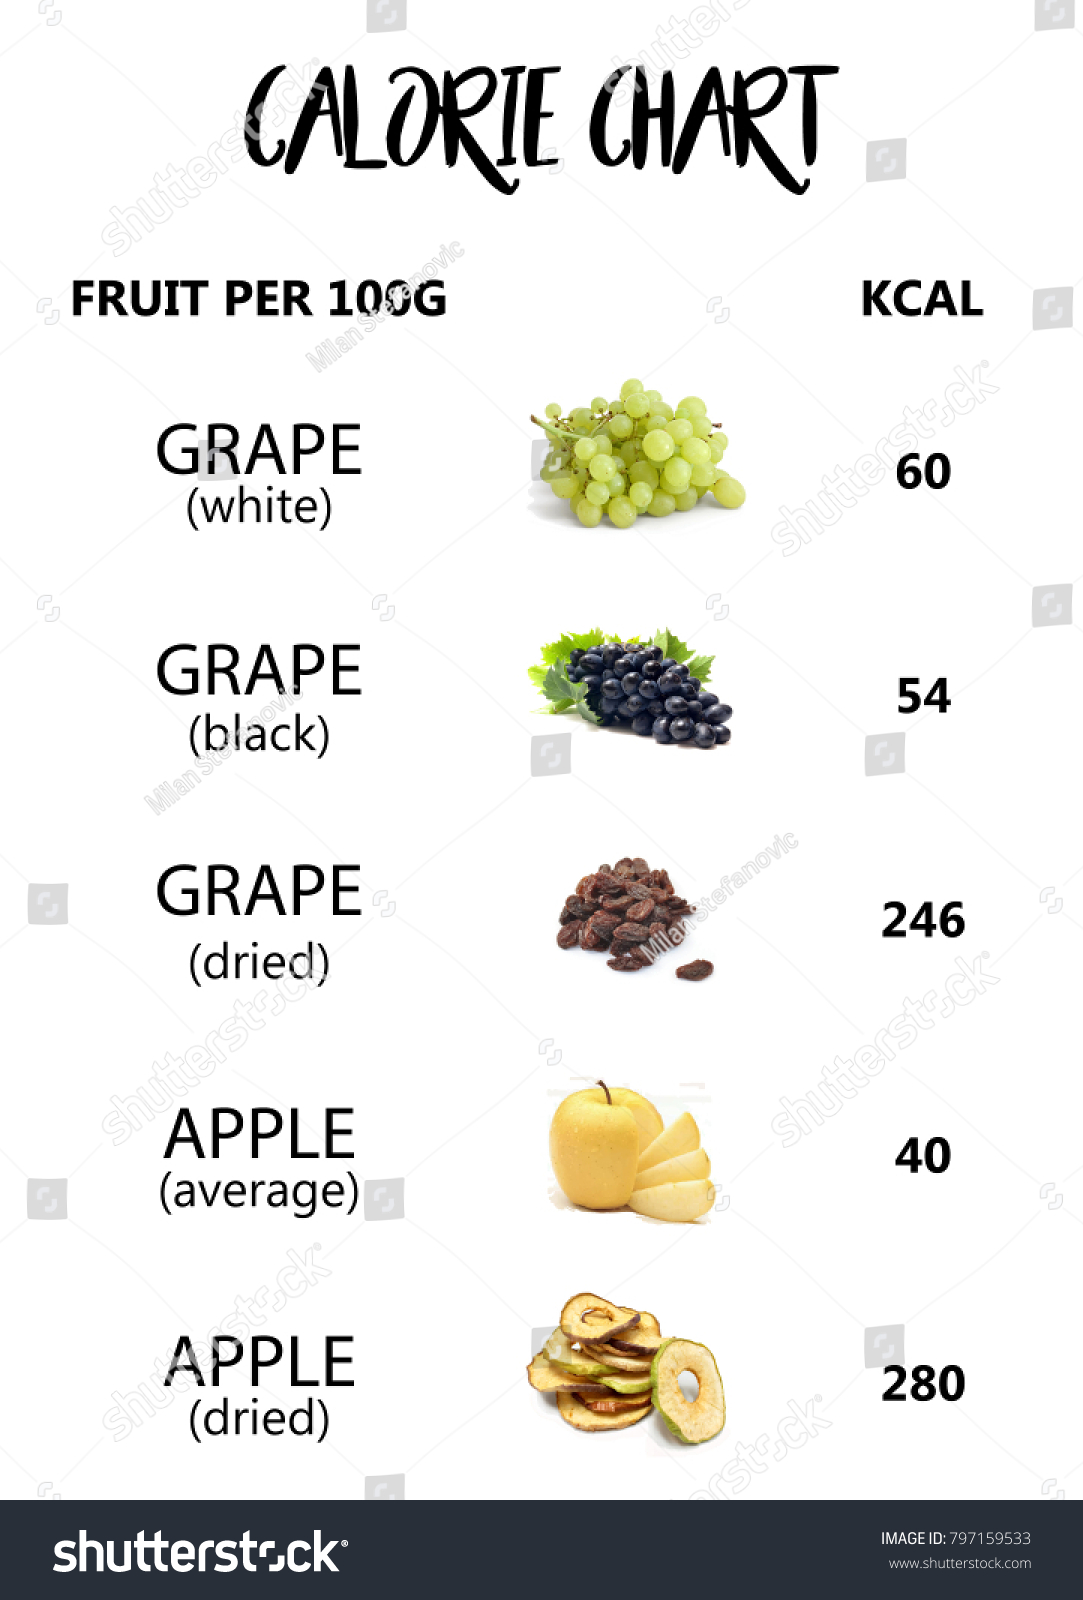 Calories Per Fruit Chart